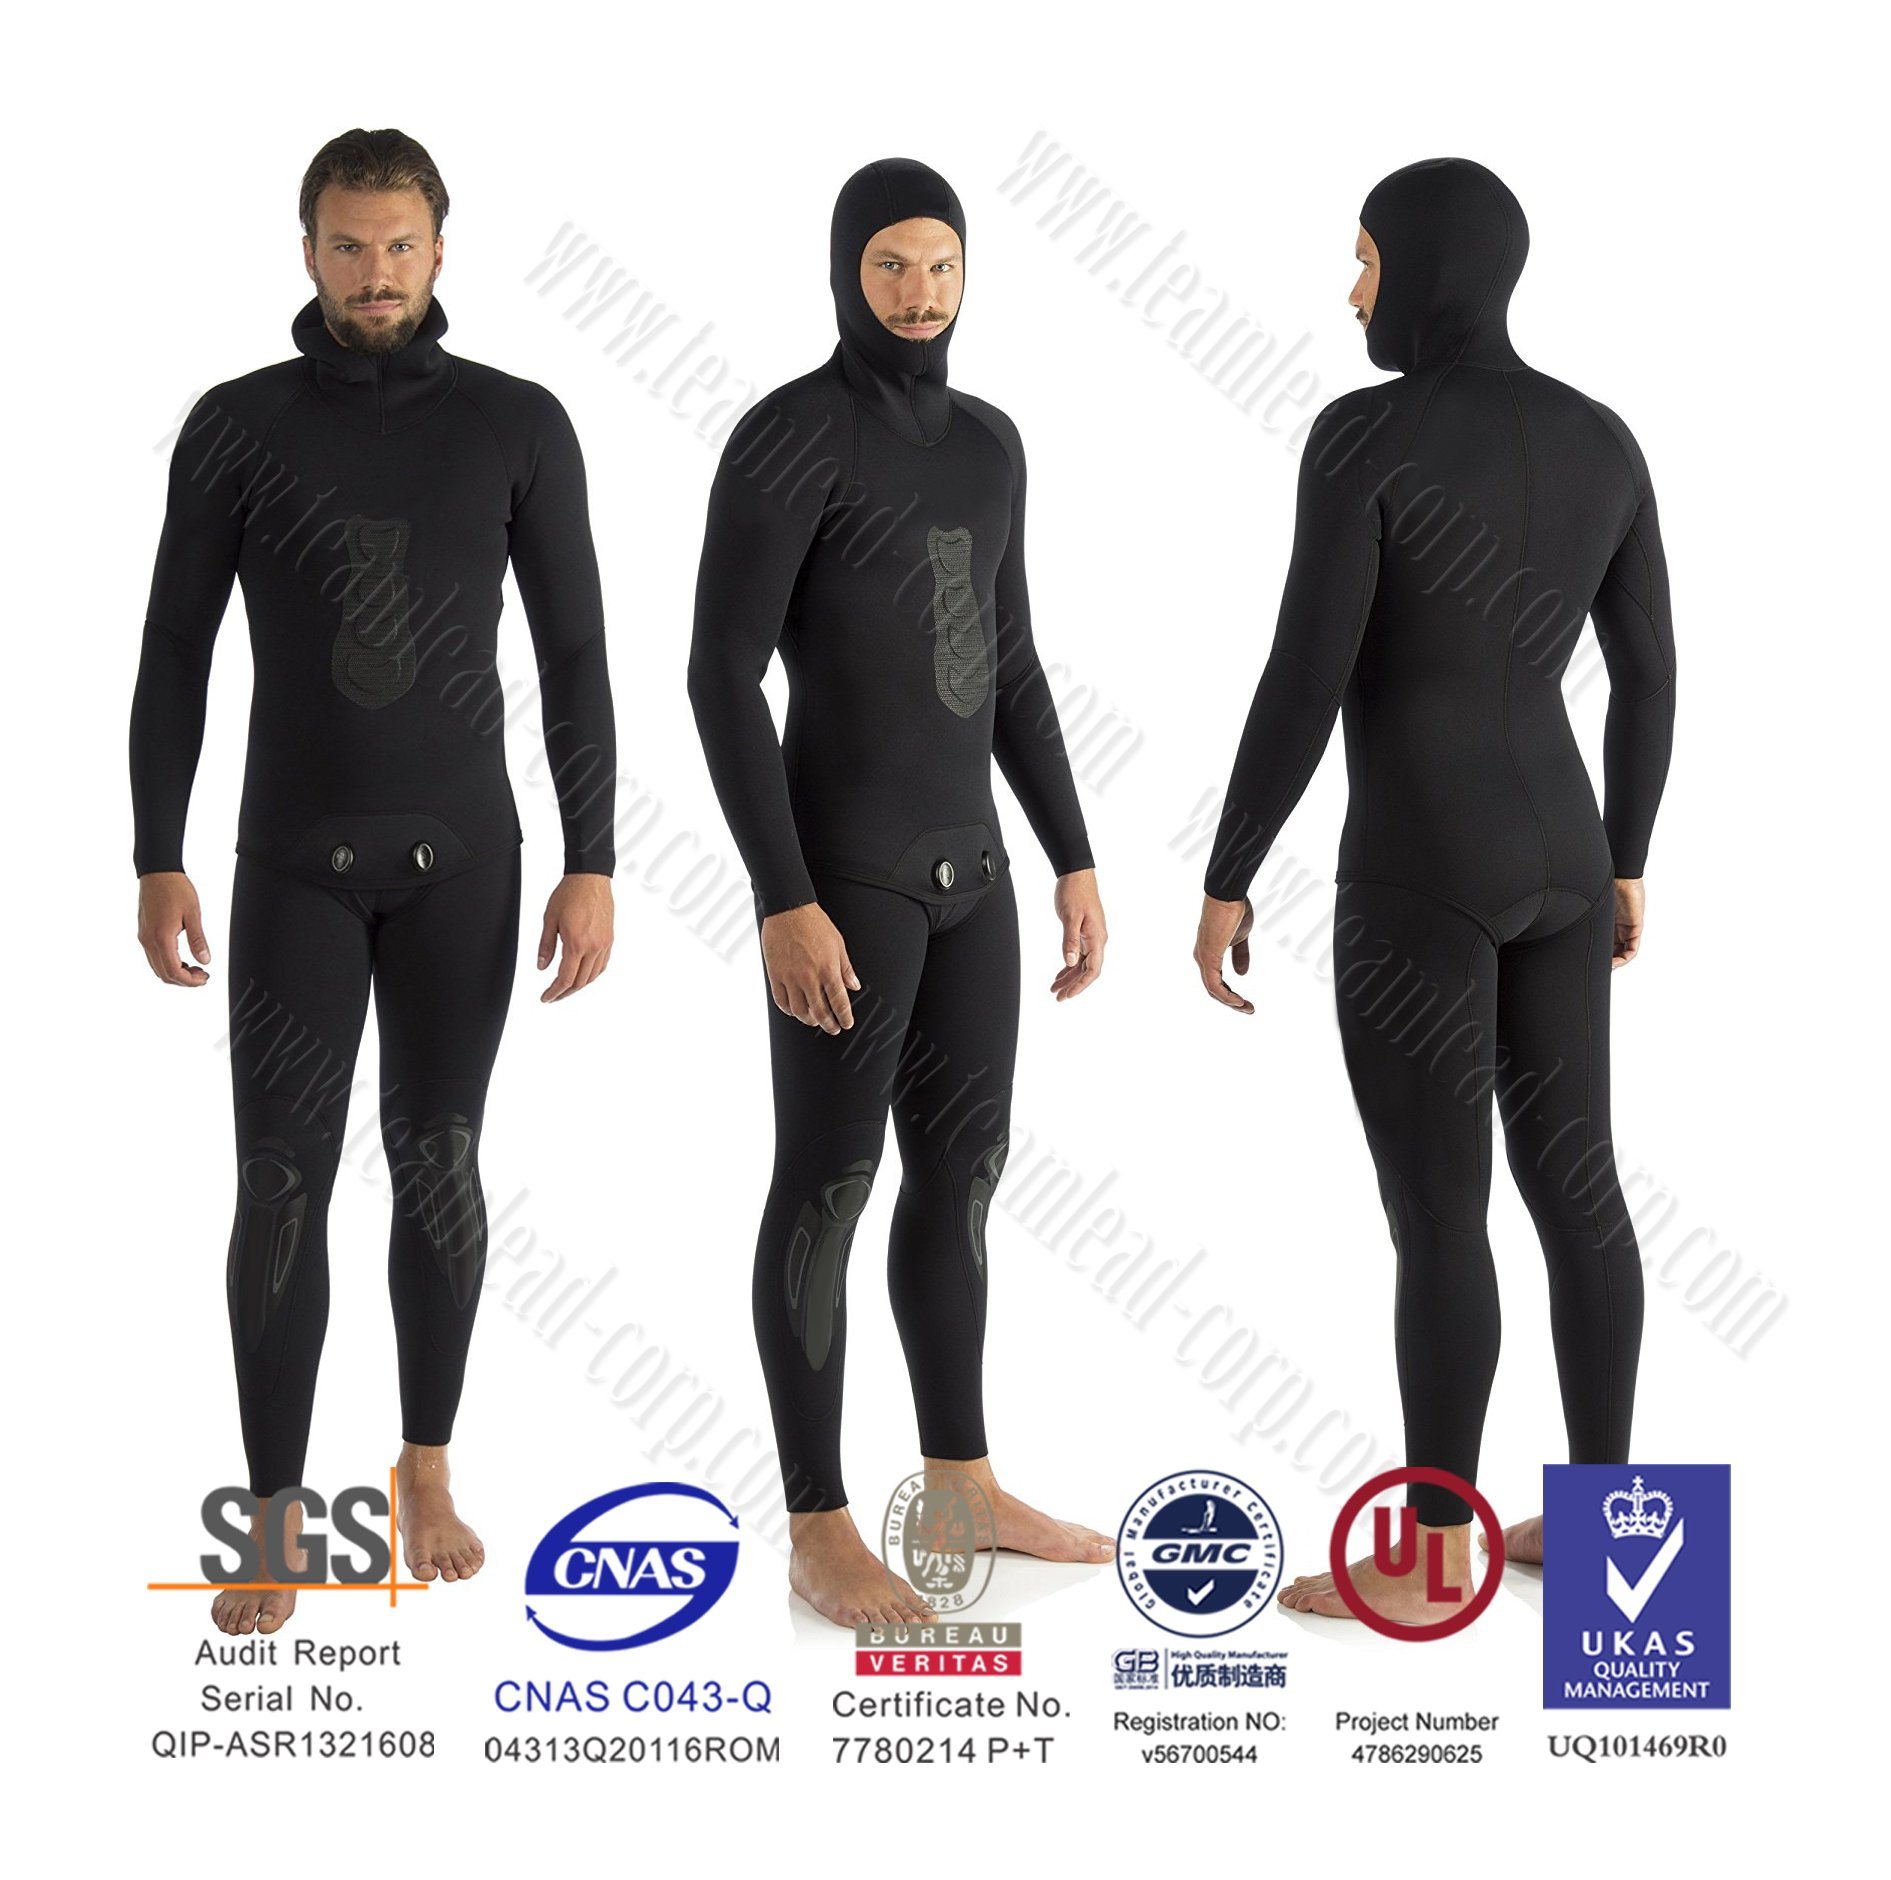 Pure Full Wetsuit 3mm Neopren – Warm Long Sleeve Wetsuit for Watersport, Snorkeling, Diving, Surfing